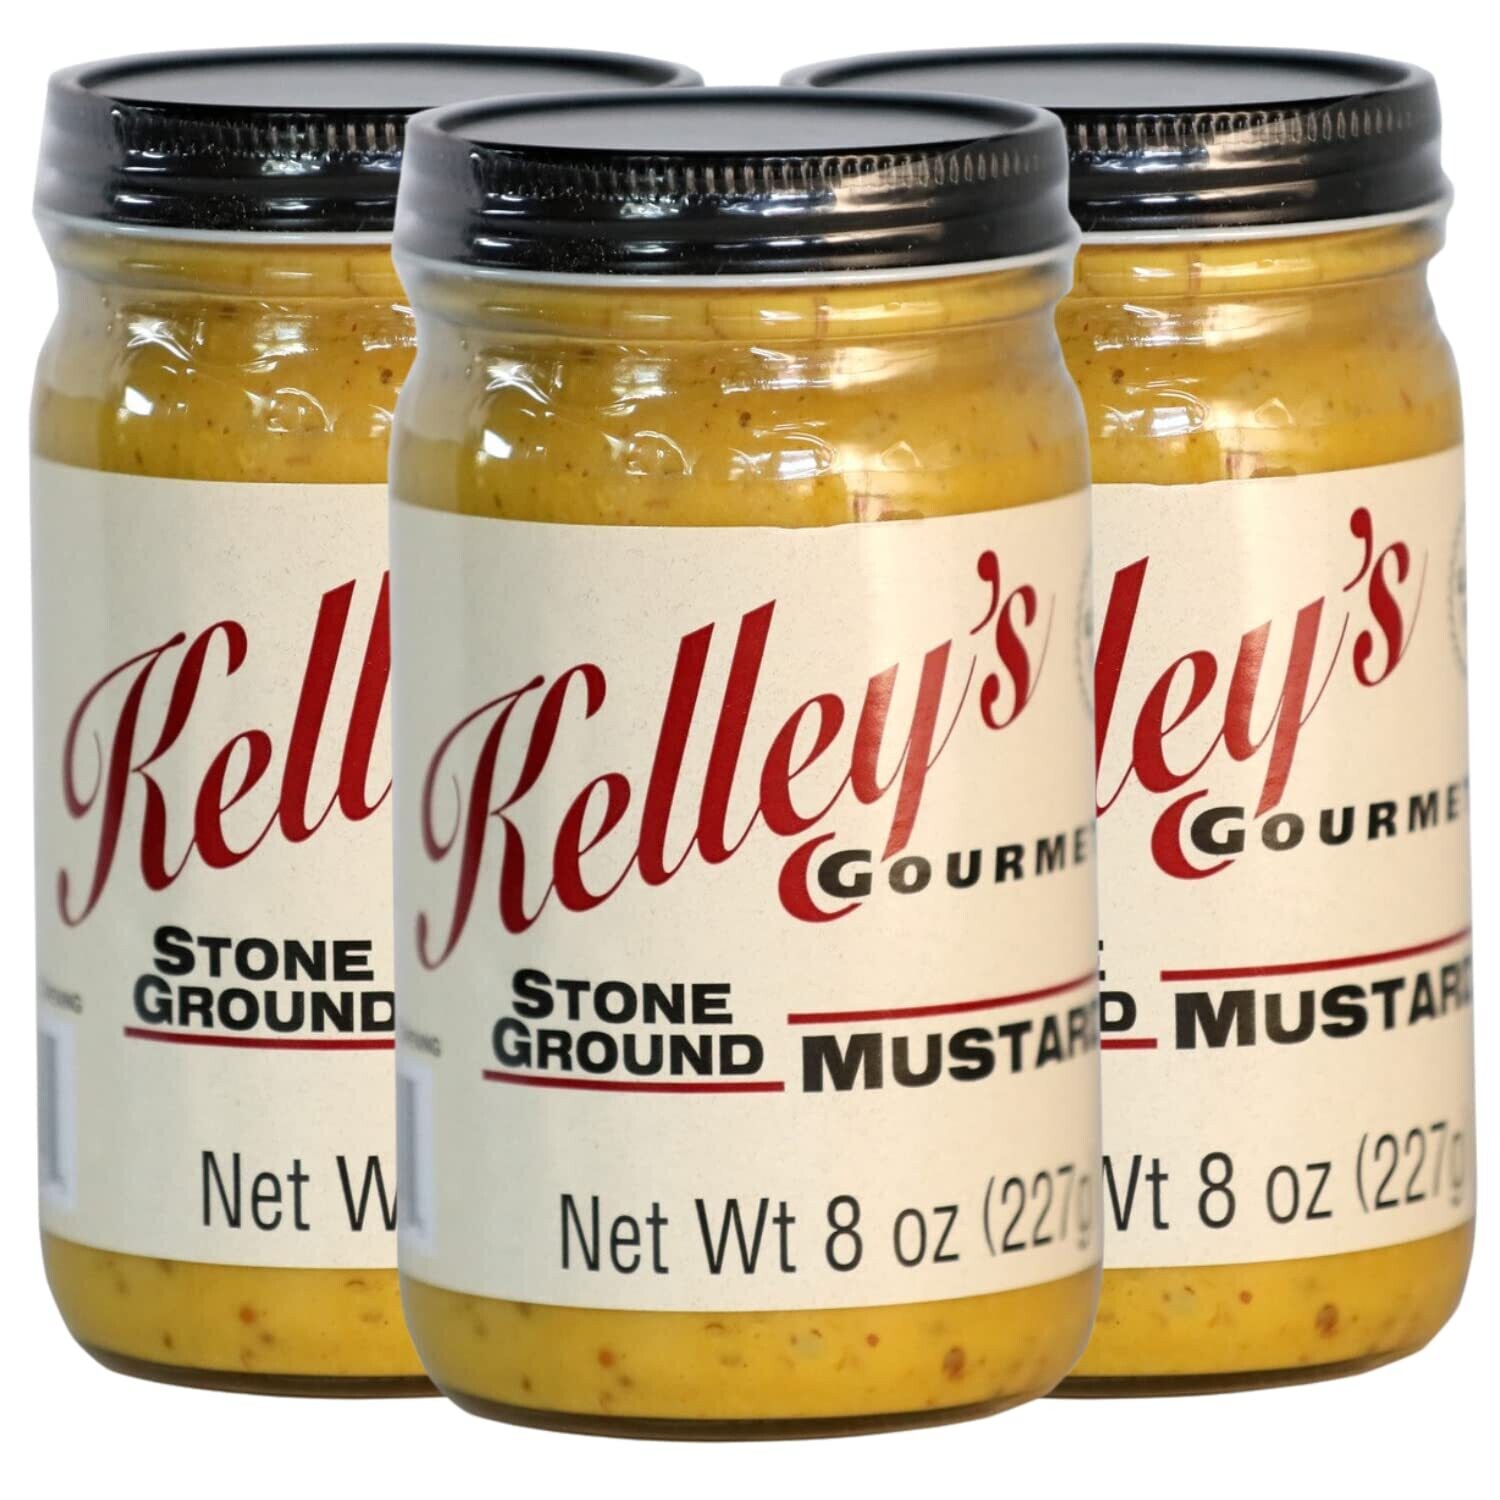 Kelley's Gourmet Stone Ground Mustard- 3 Pack